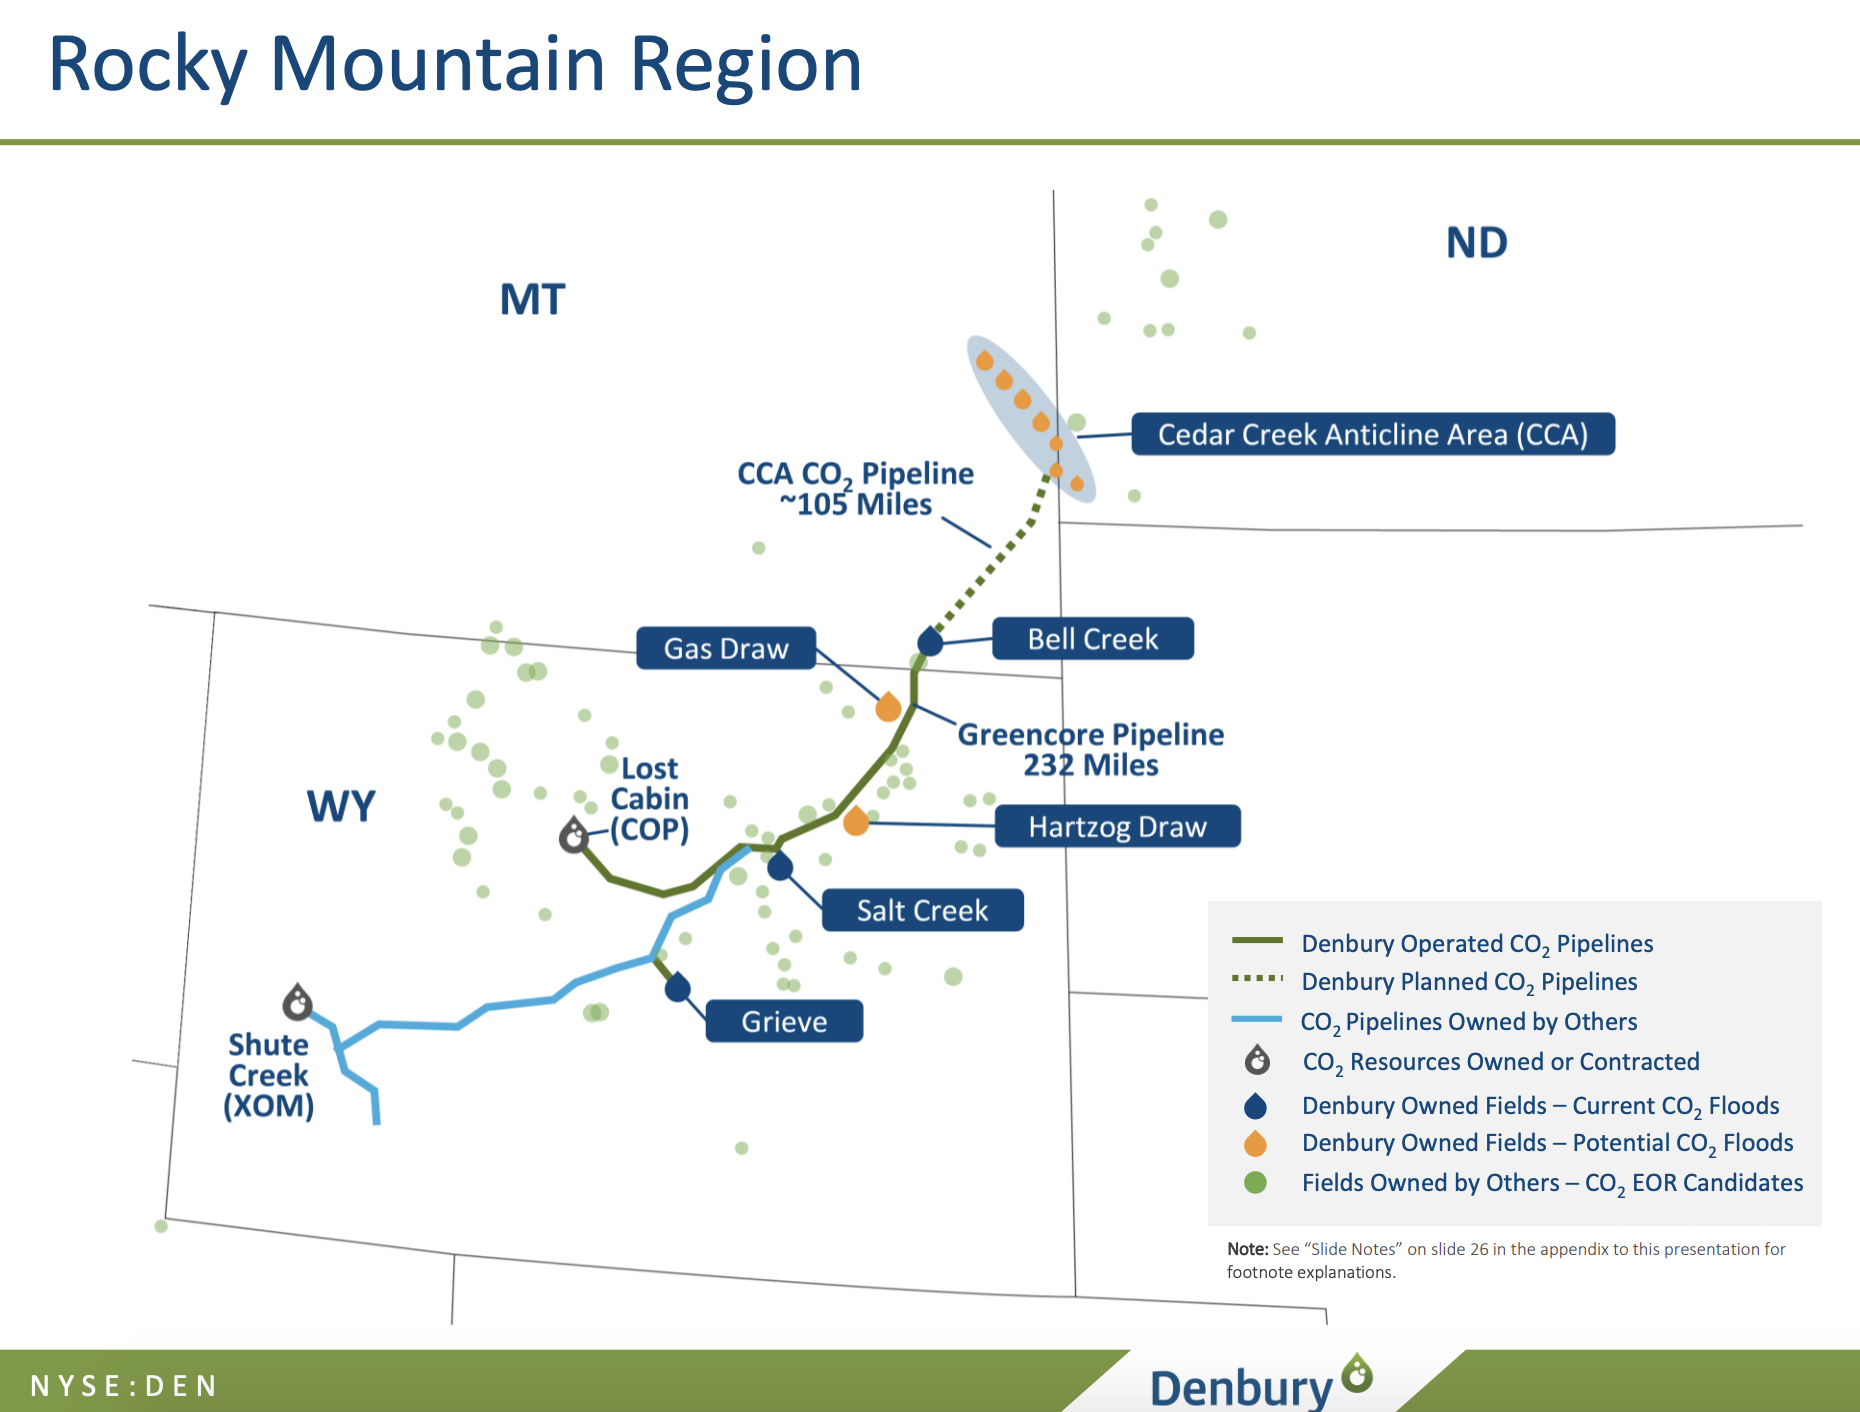 Denbury Rocky Mountain Footprint (Source: Denbury Corporate Presentation December 2020)